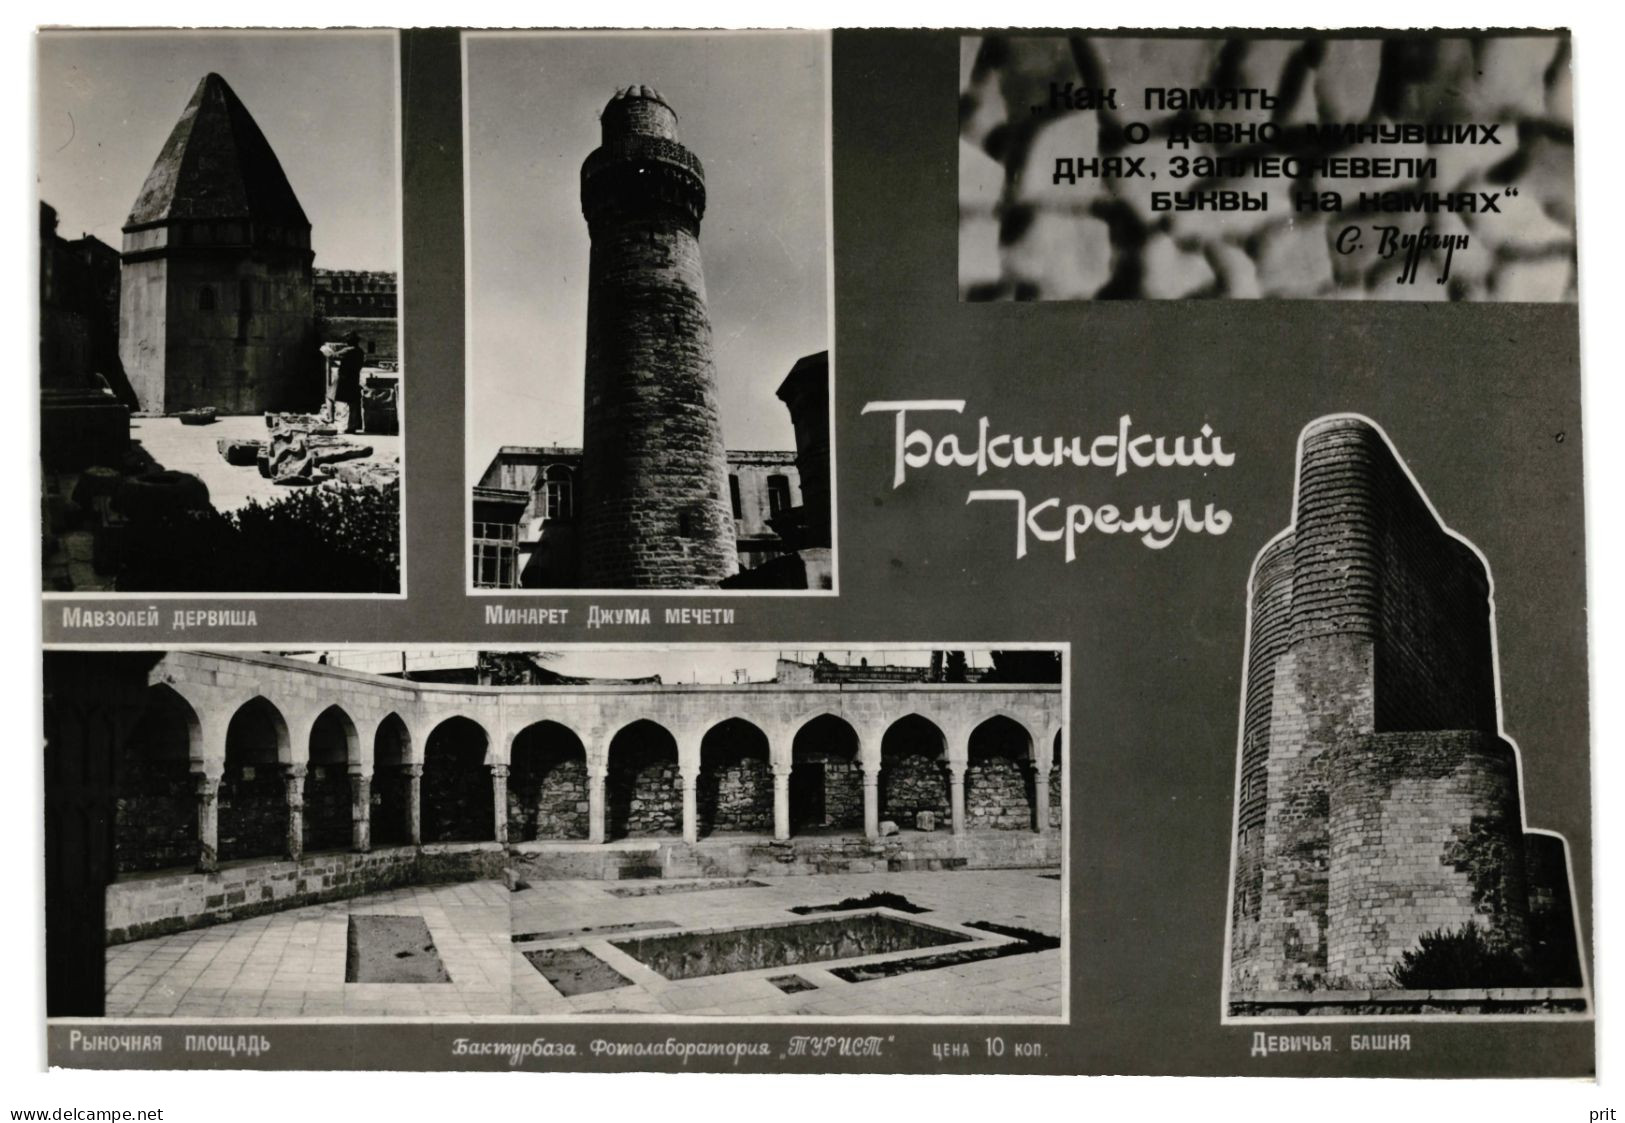 Baku Old Town Soviet Azerbaijan USSR 1970 Unused Multi-View Photo Postcard. Publisher Bakturbaza Turist - Azerbaigian